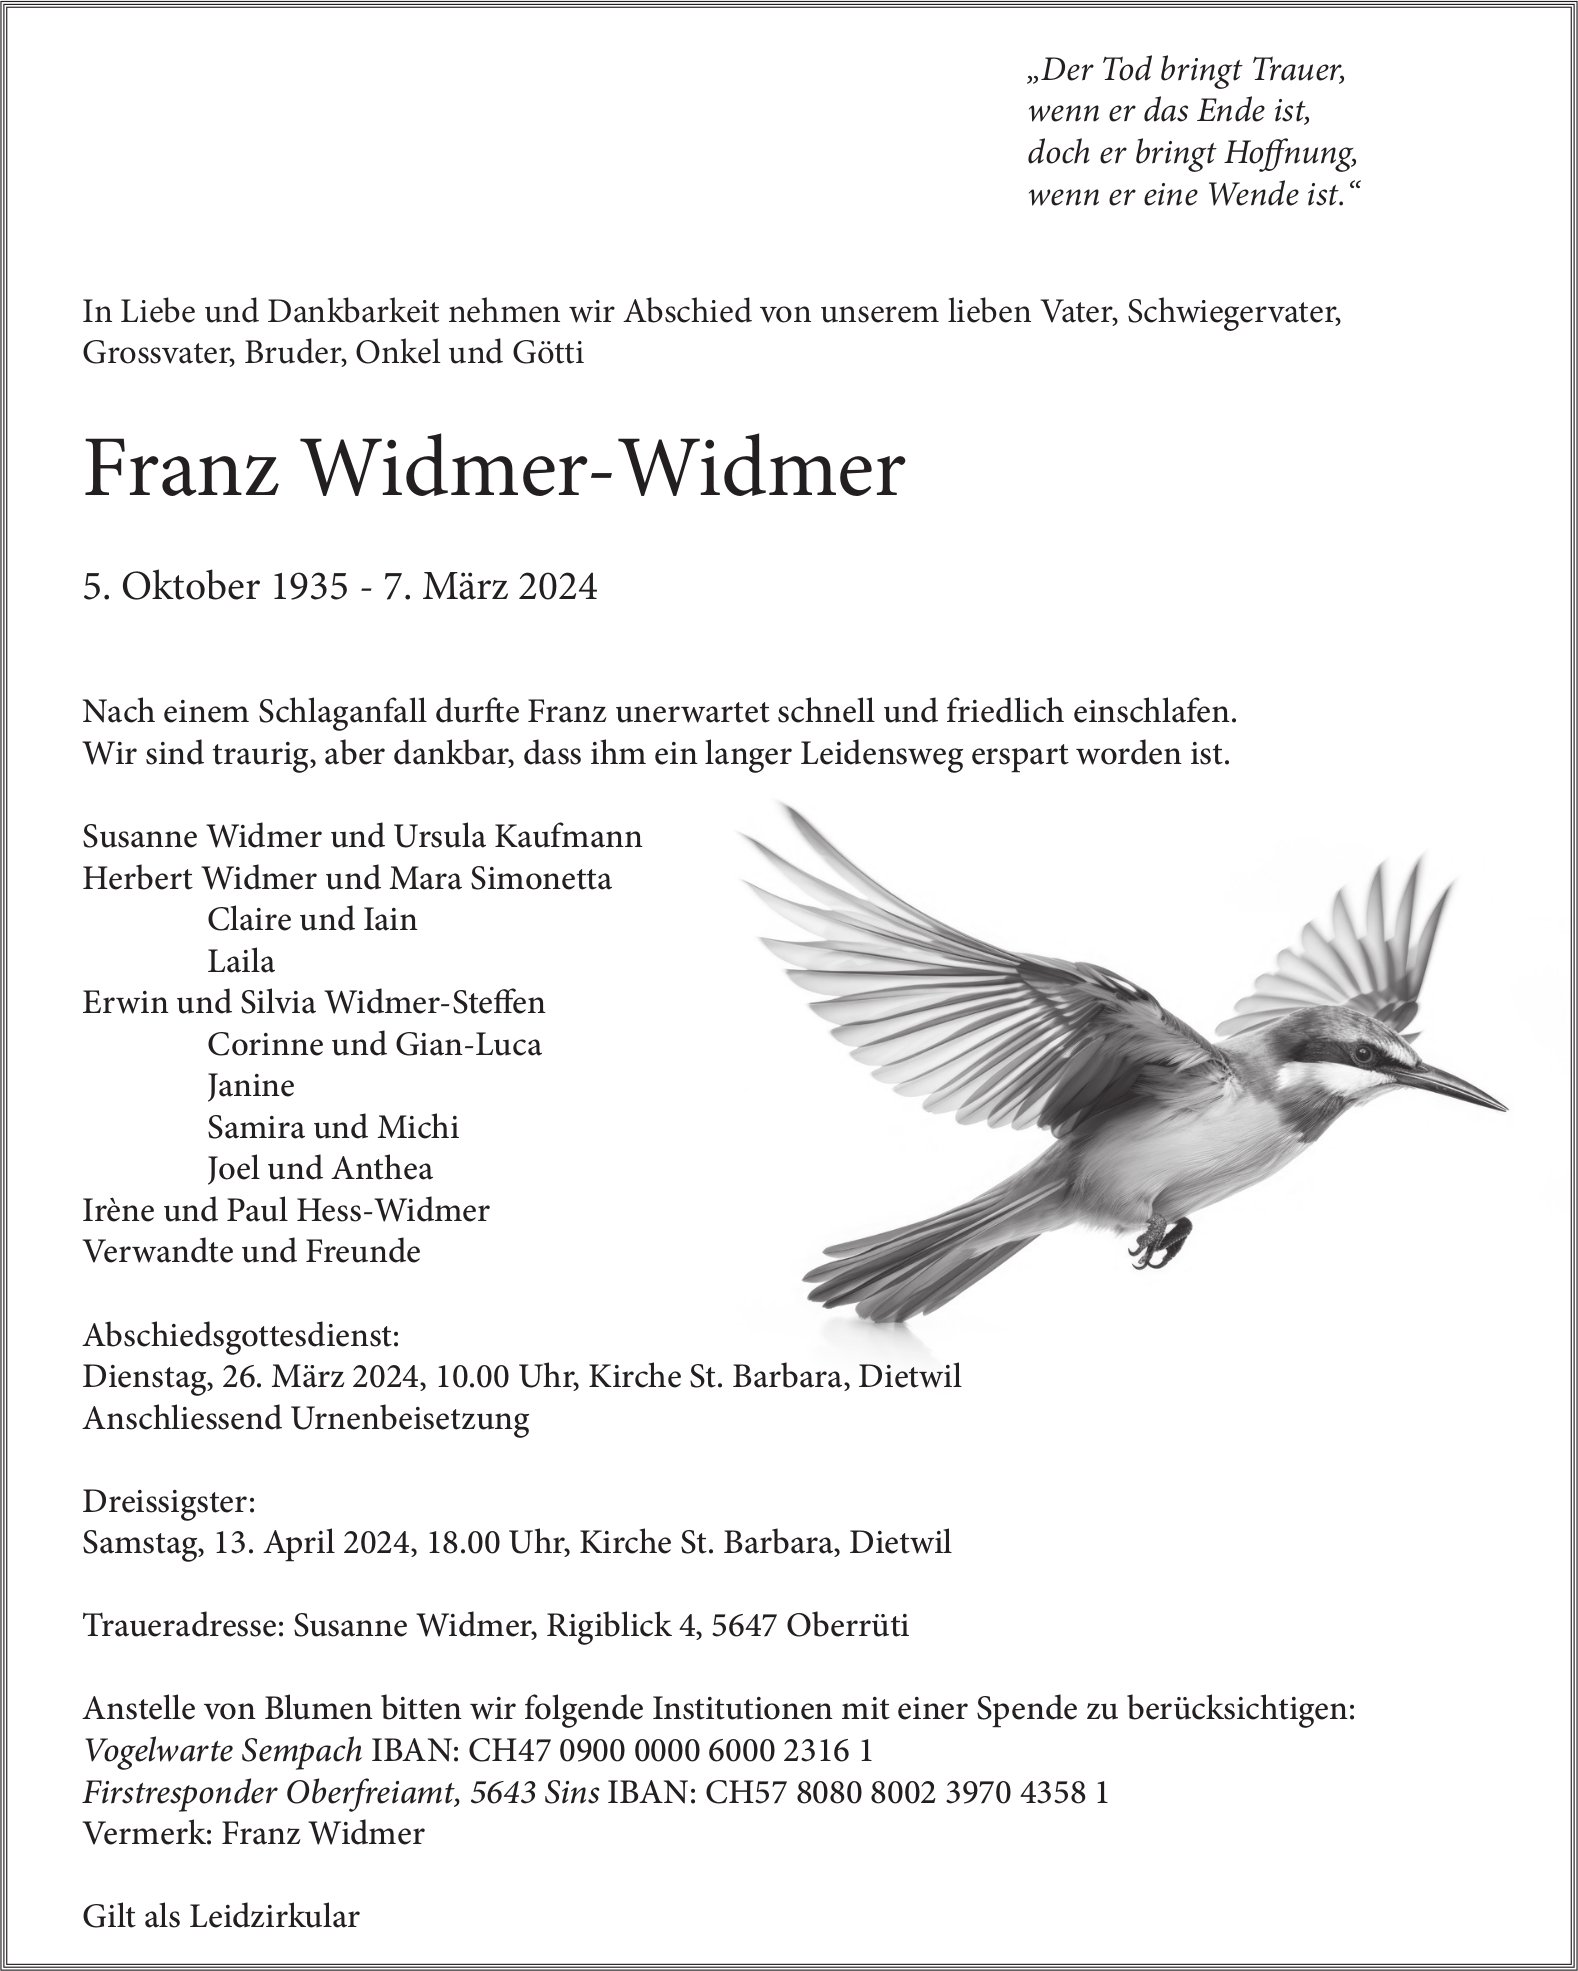 Widmer-Widmer Franz, März 2024 / TA